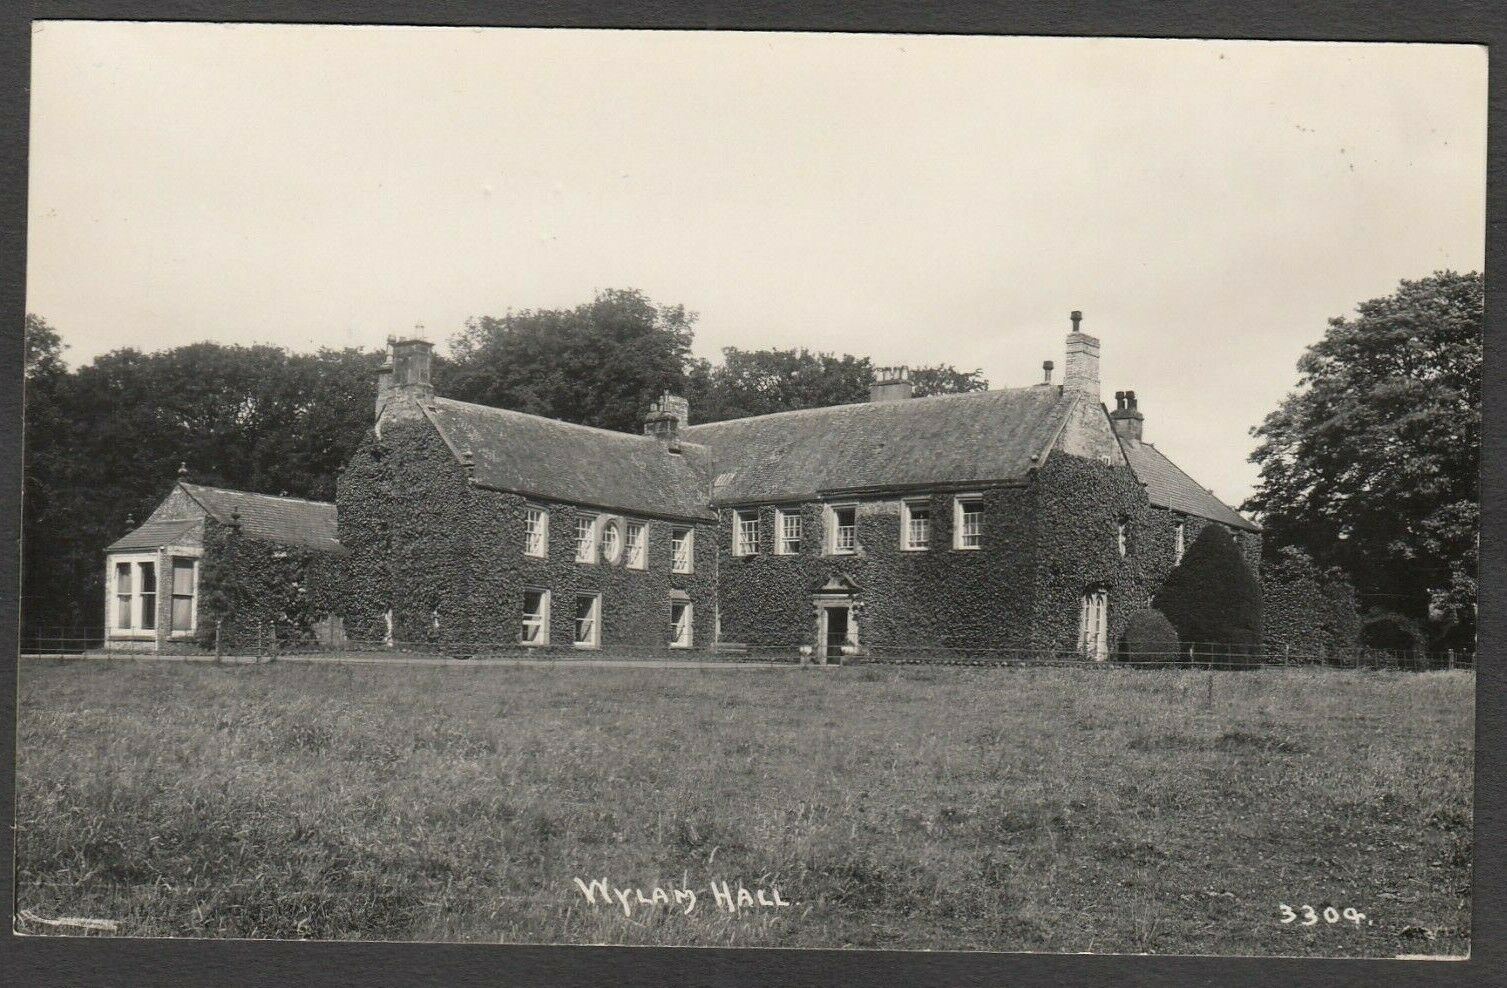 Wylam Hall